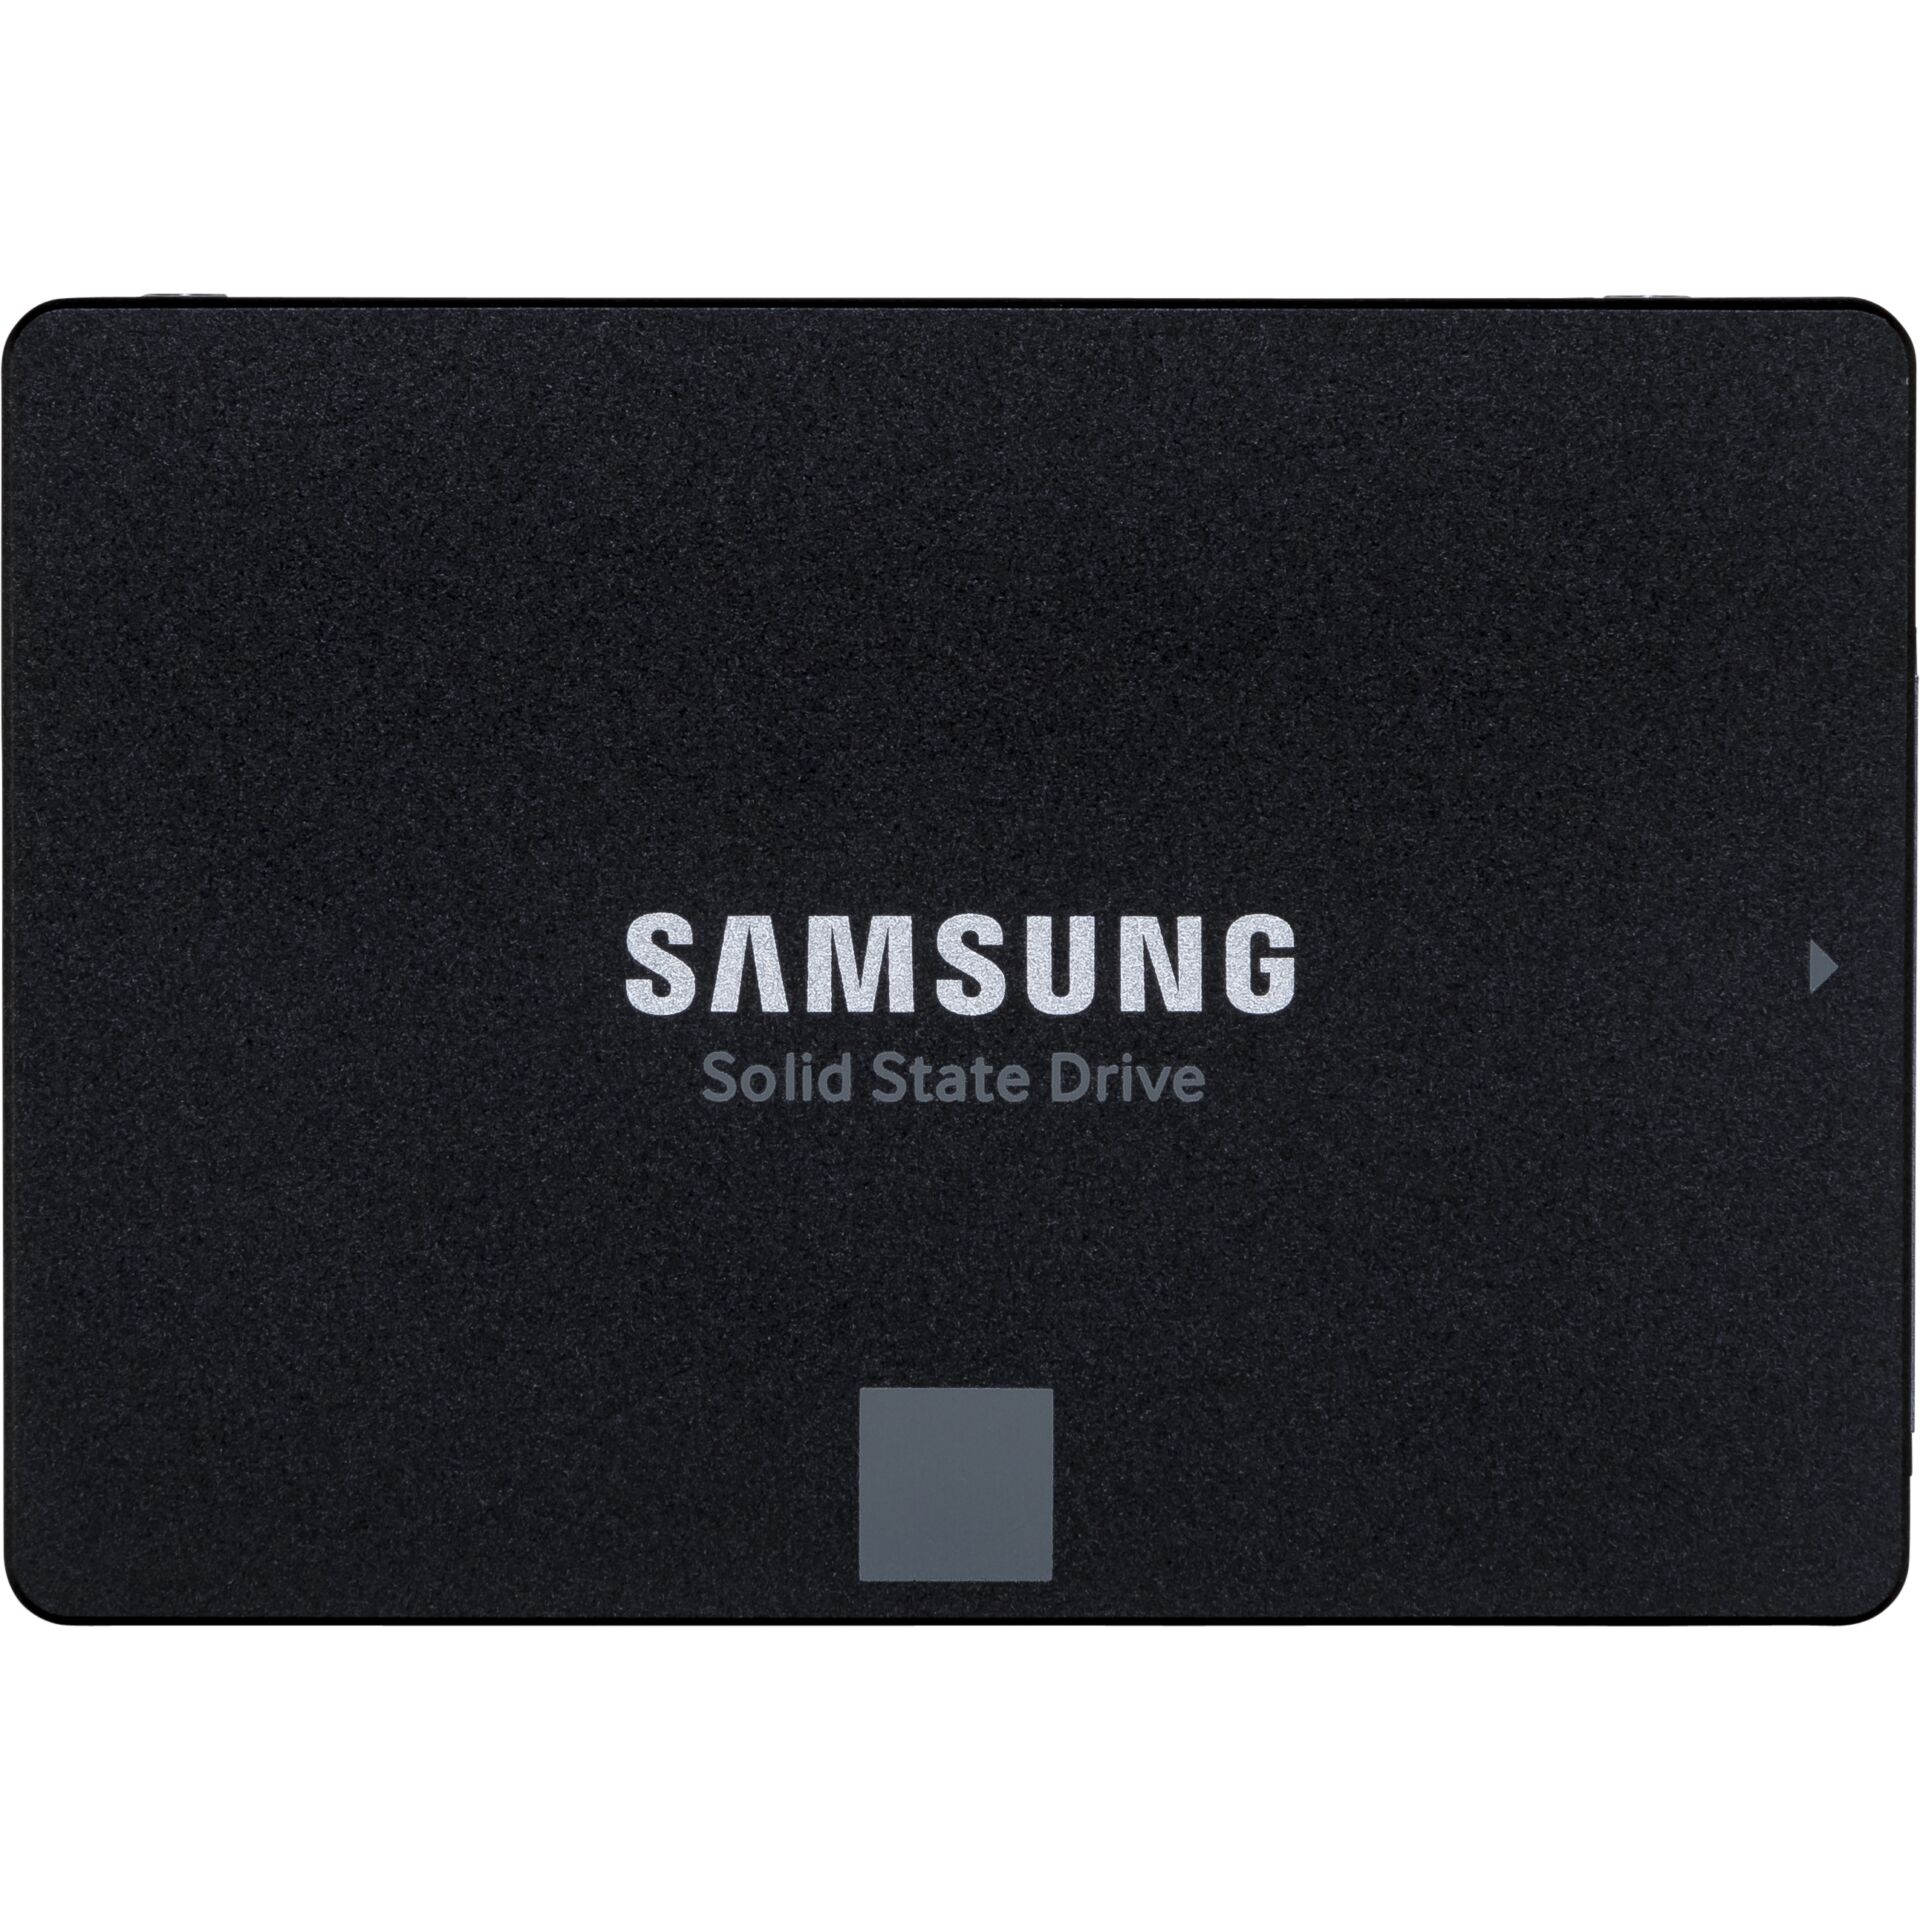 1.0 TB SSD Samsung 870 EVO B2B SATA 6Gb/s 6,4cm/ 2.5 Zoll lesen: 560MB/s, schreiben: 530MB/s, TBW: 600TB